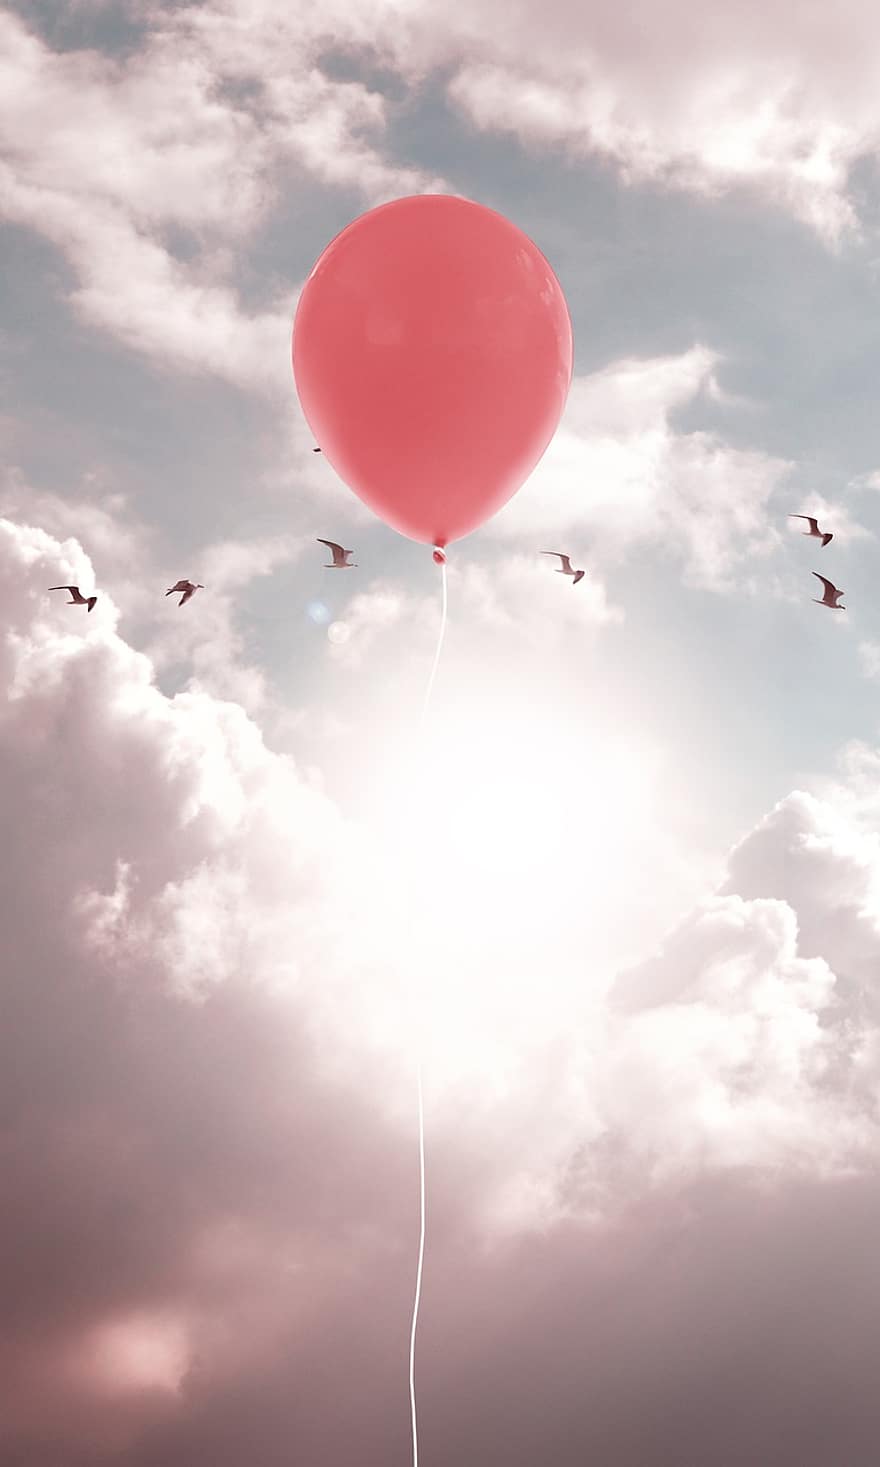 balon, Burung Matahari, awan, suasana hati, langit, sinar matahari, dom, penerbangan, harapan, senang, harmoni